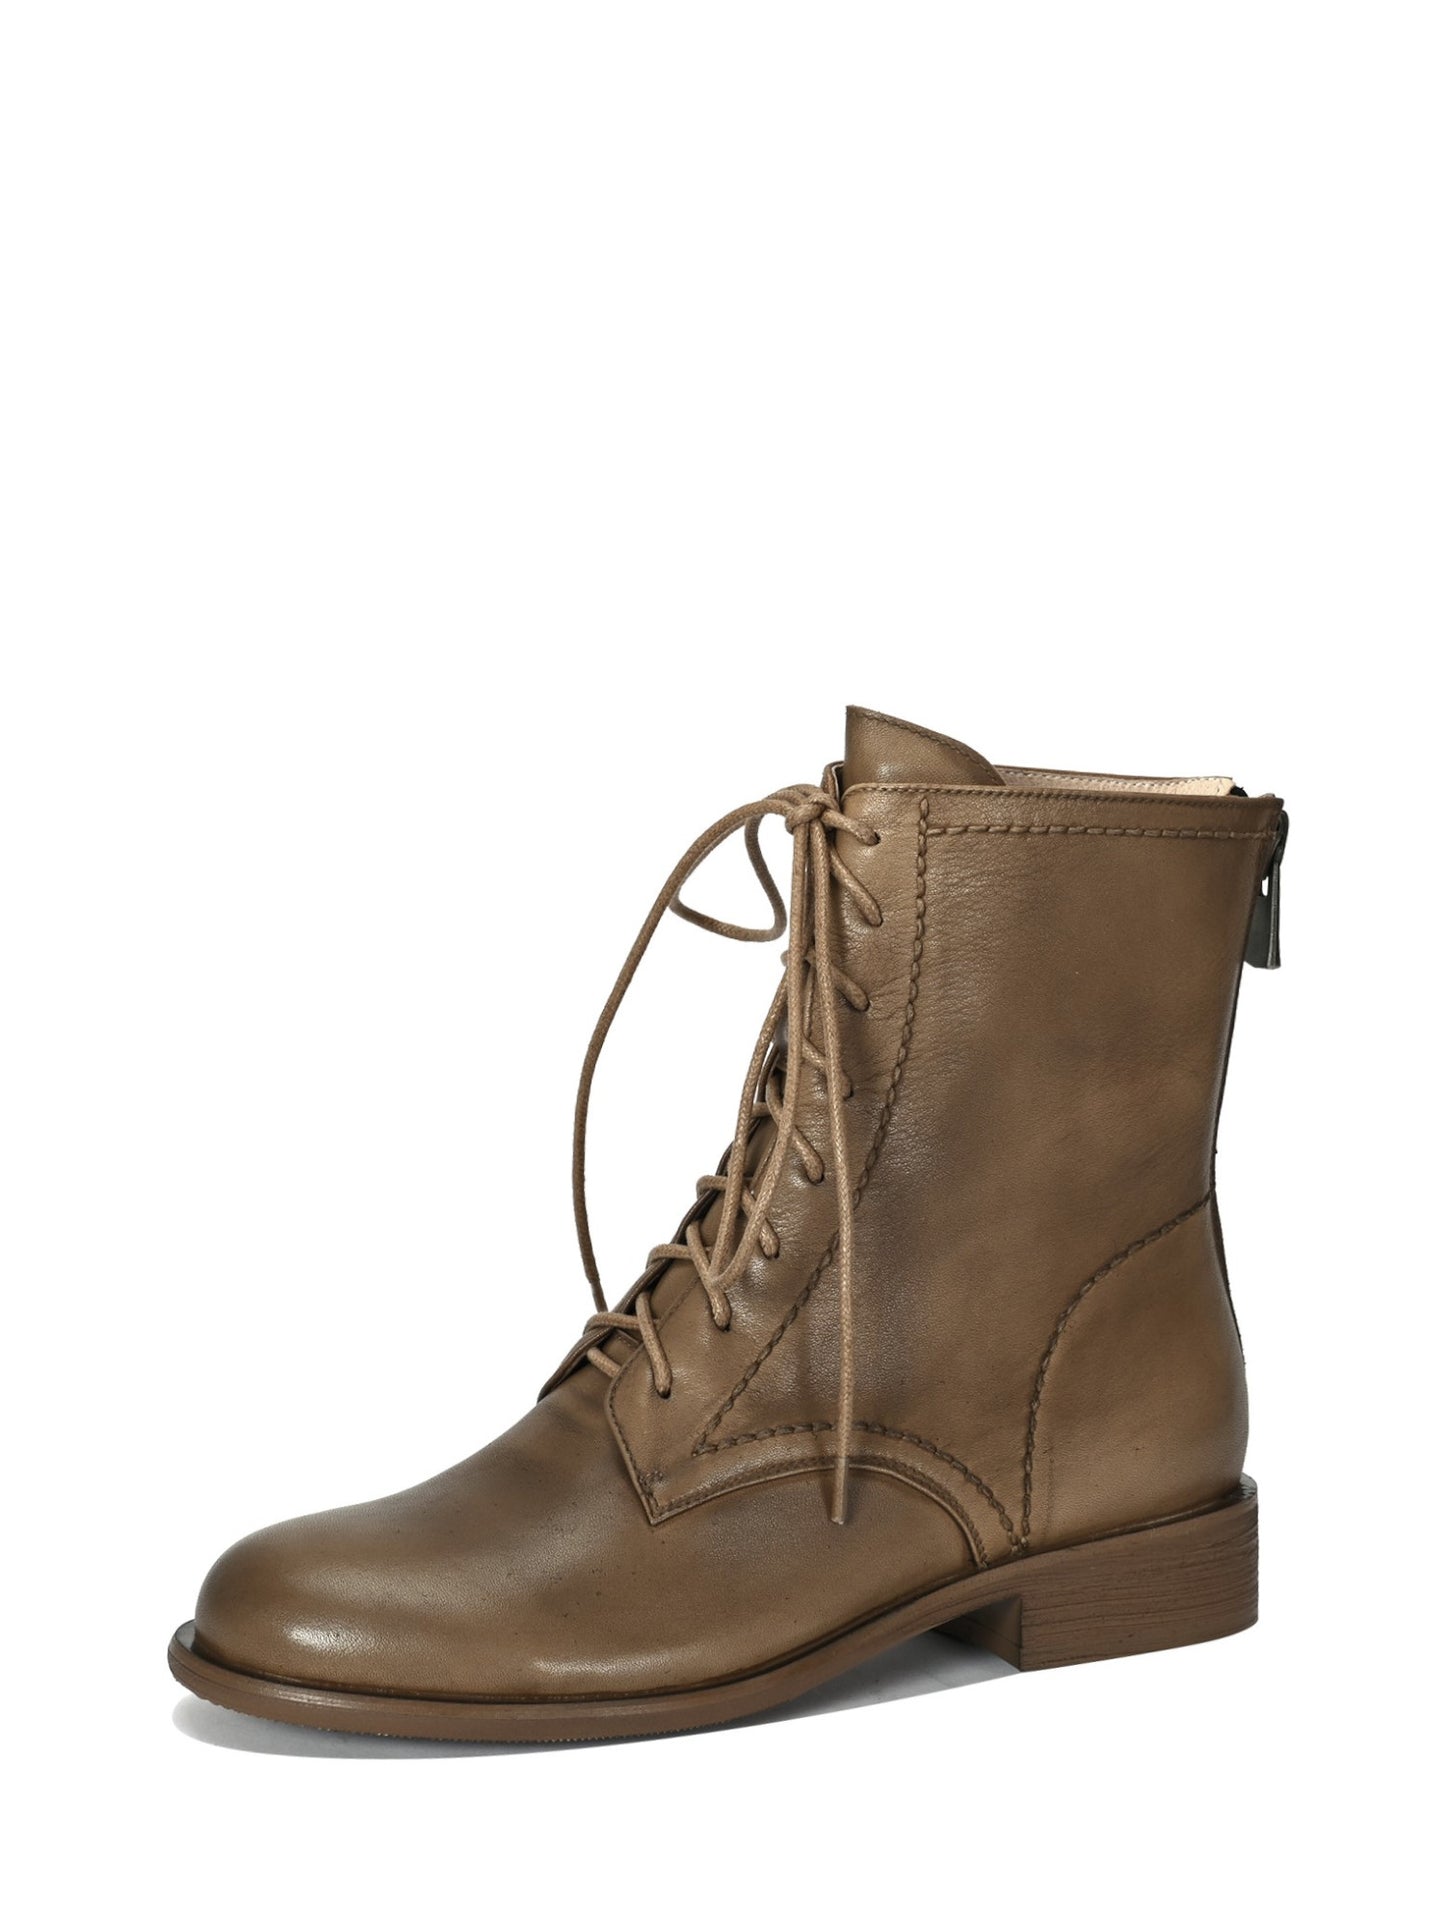 Iven-Khaki-Leather-Combat-Boots